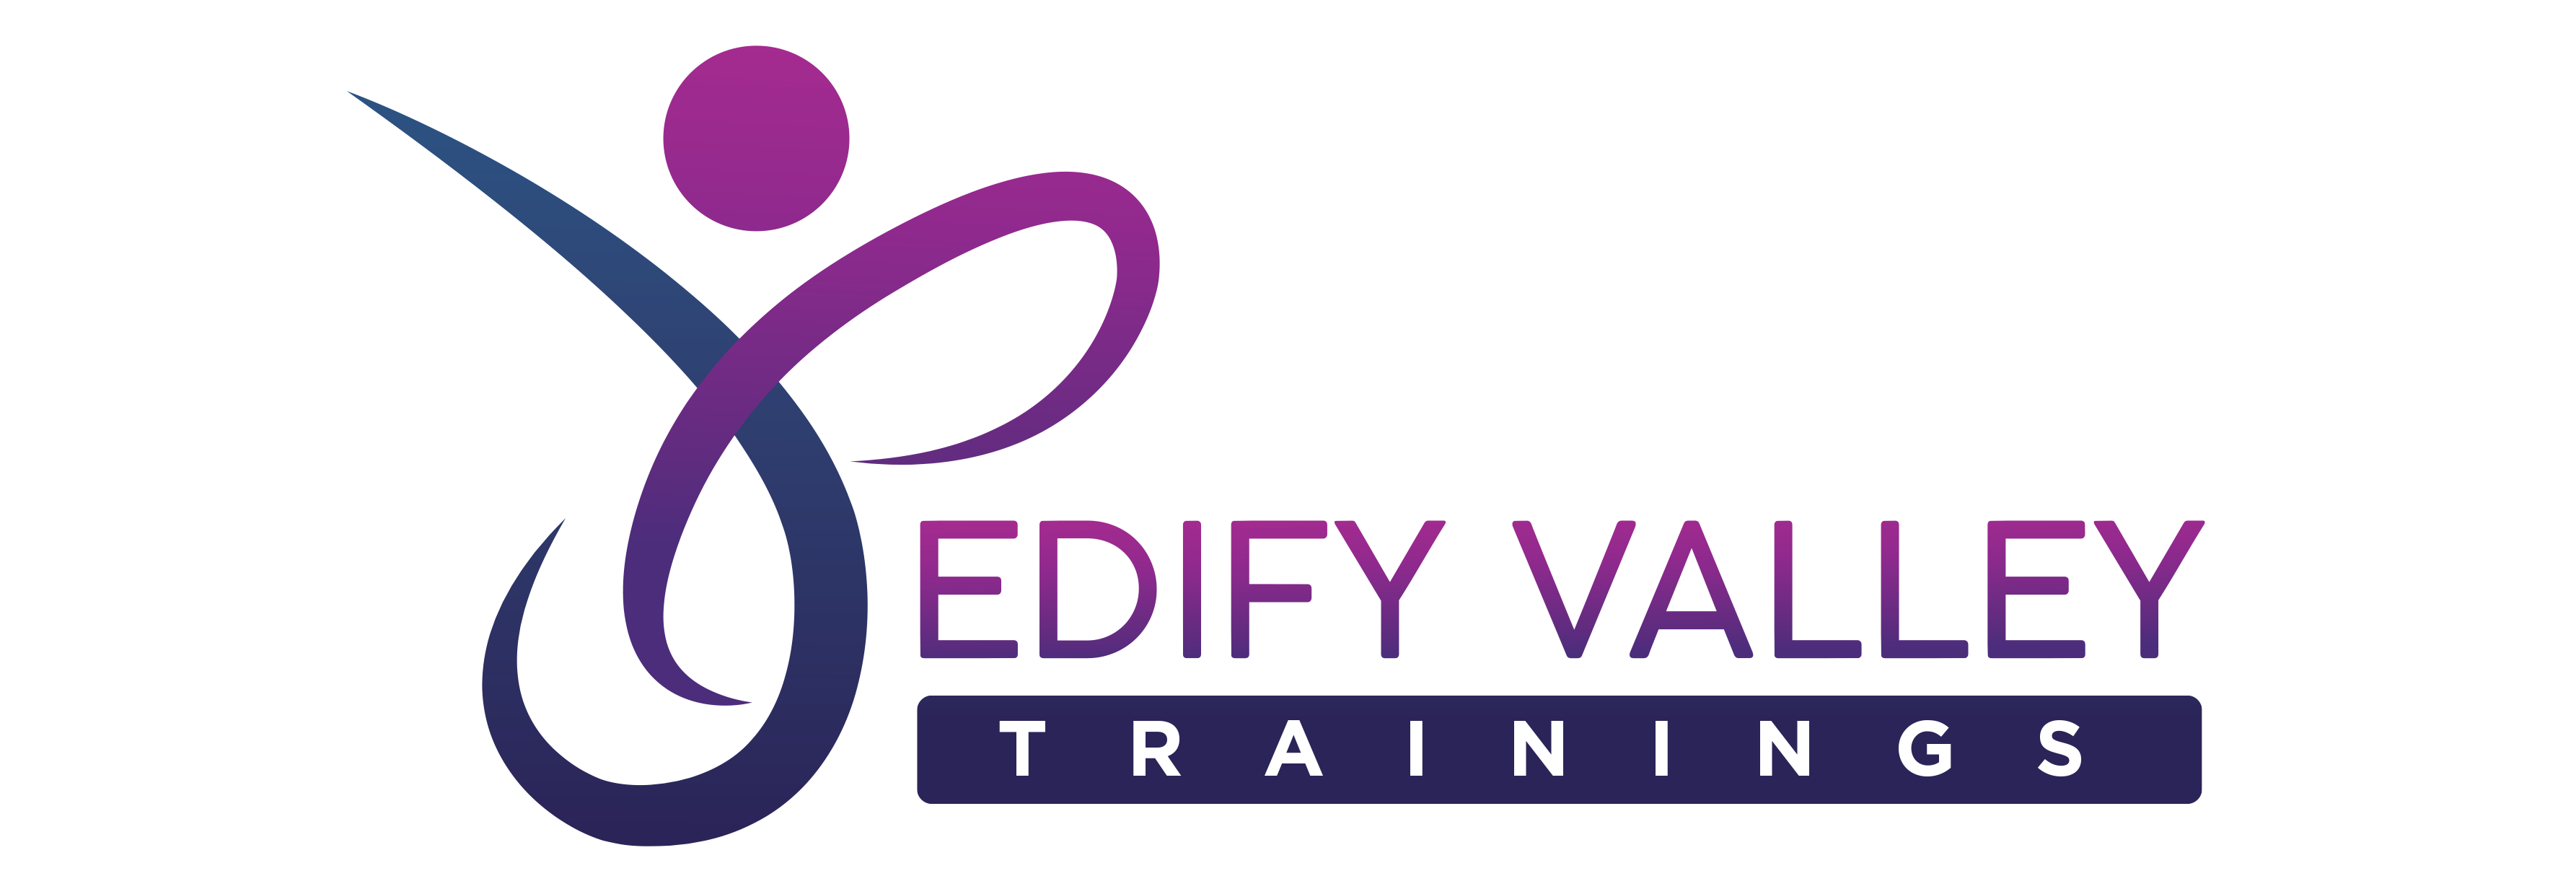 Edify Valley Trainings - 